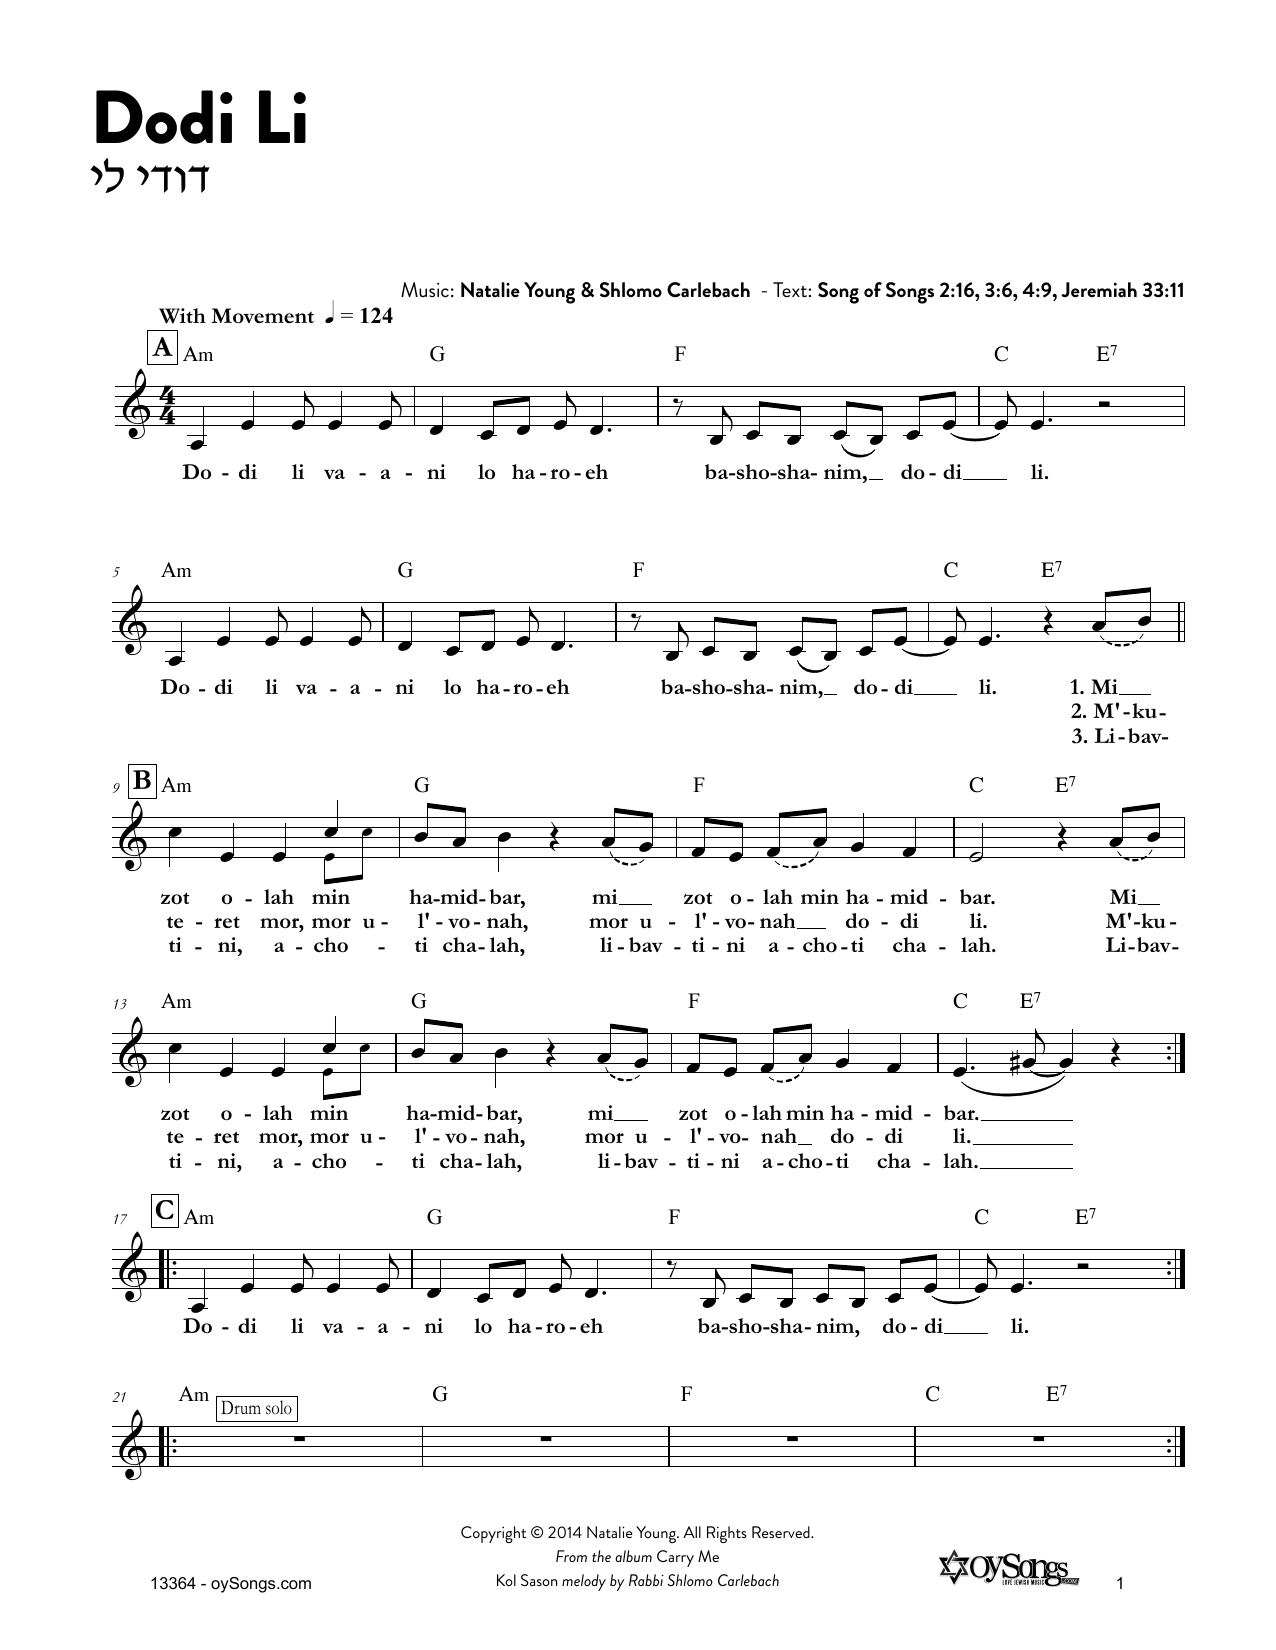 Natalie Young Dodi Li Sheet Music Notes & Chords for Melody Line, Lyrics & Chords - Download or Print PDF